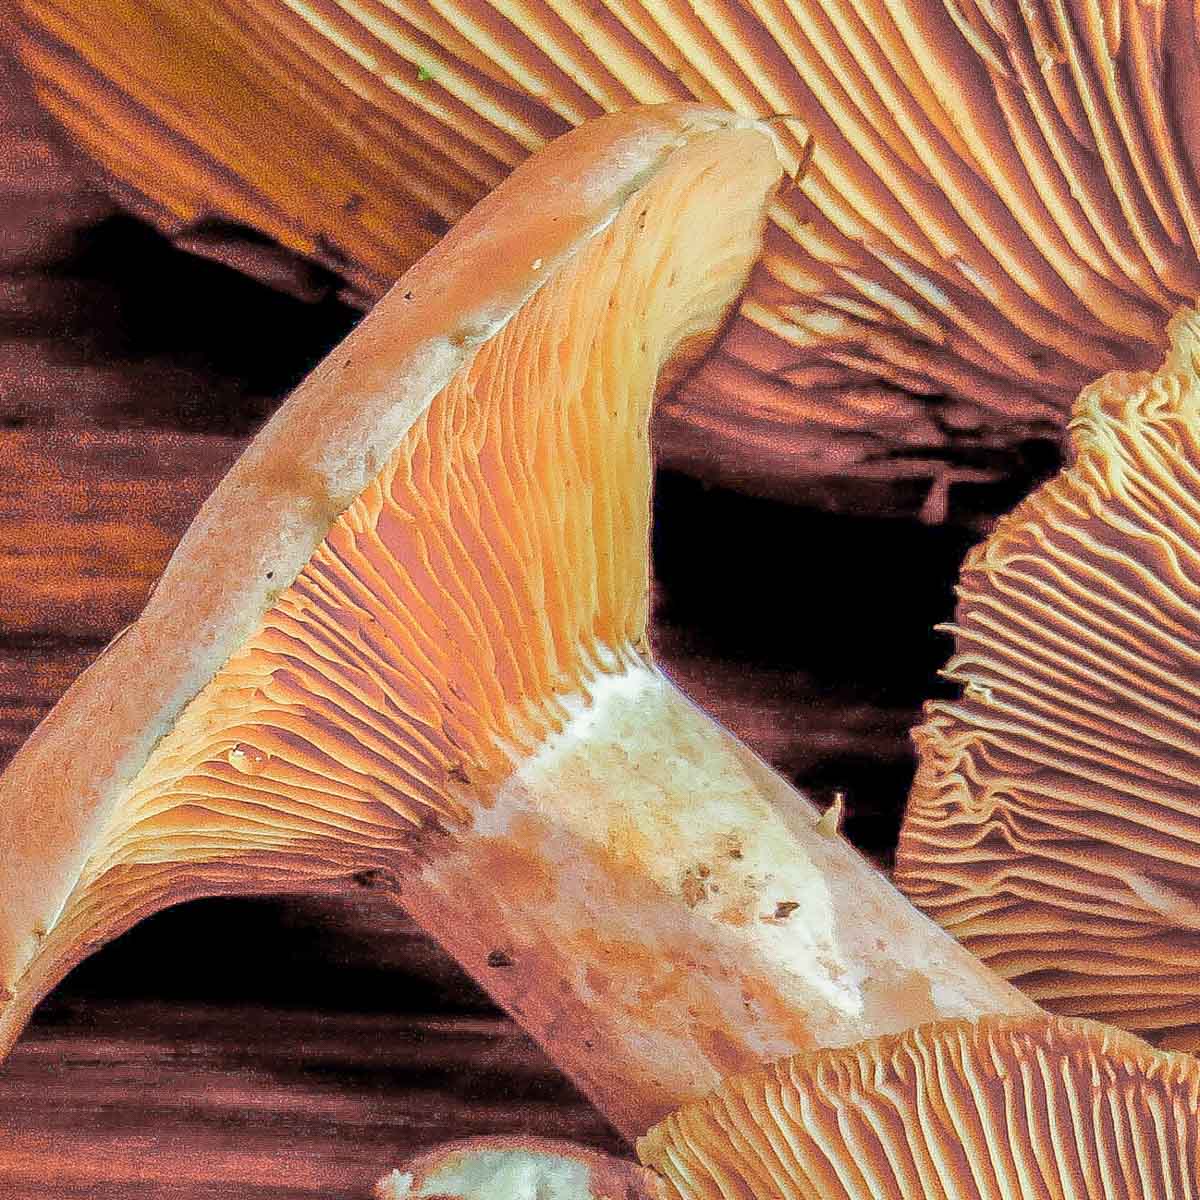 orange mushrooms with orange gills 